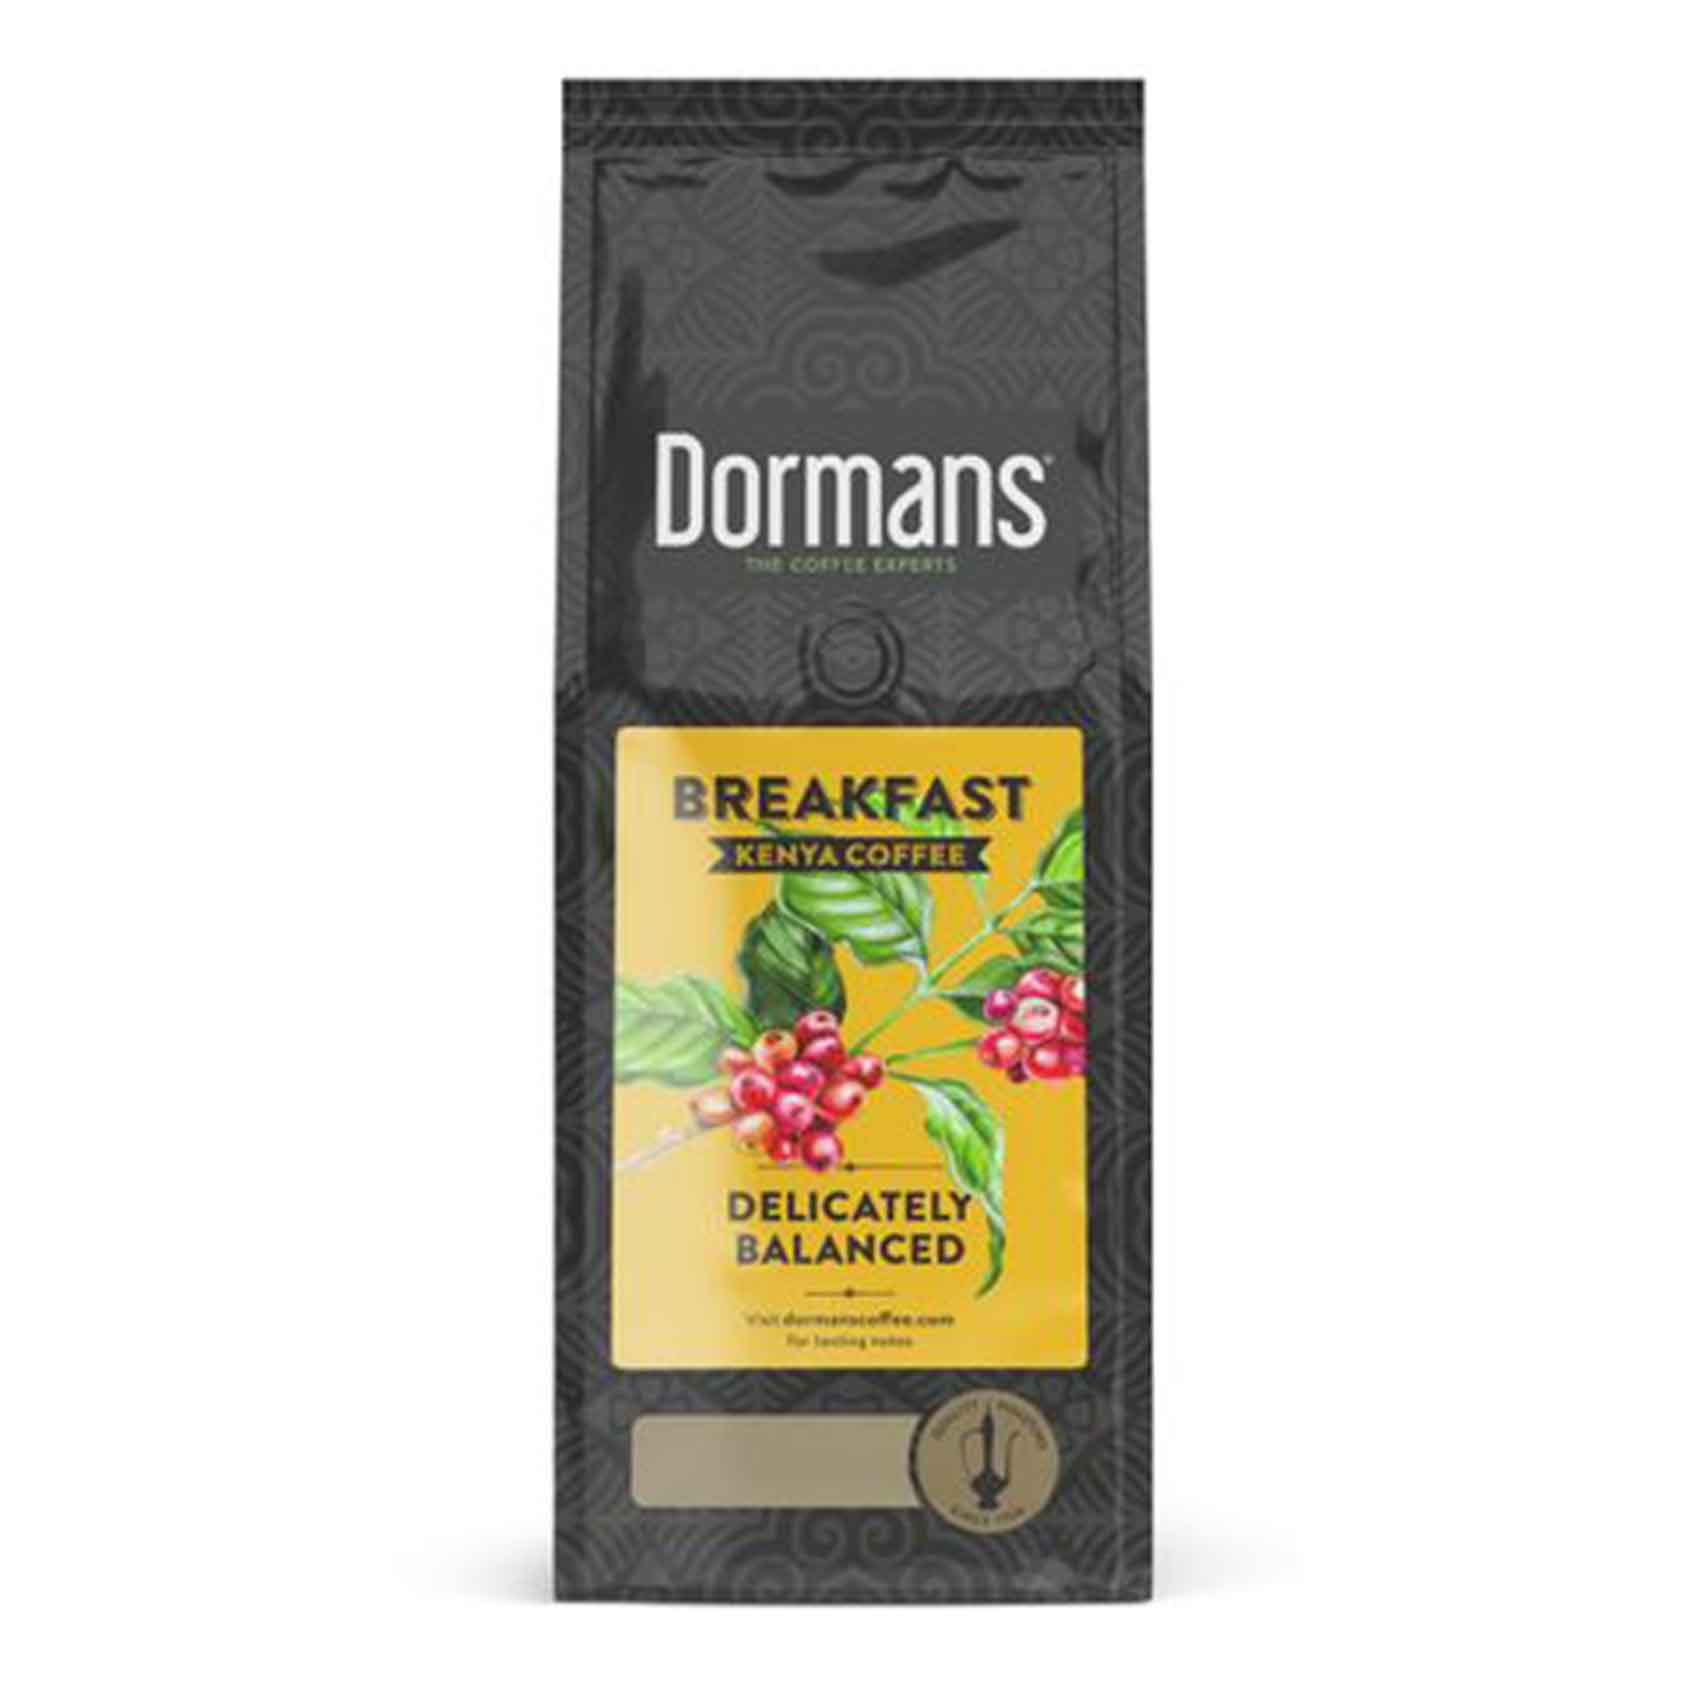 Dormans Breakfast Dark Chocolate Coffee Beans 375g